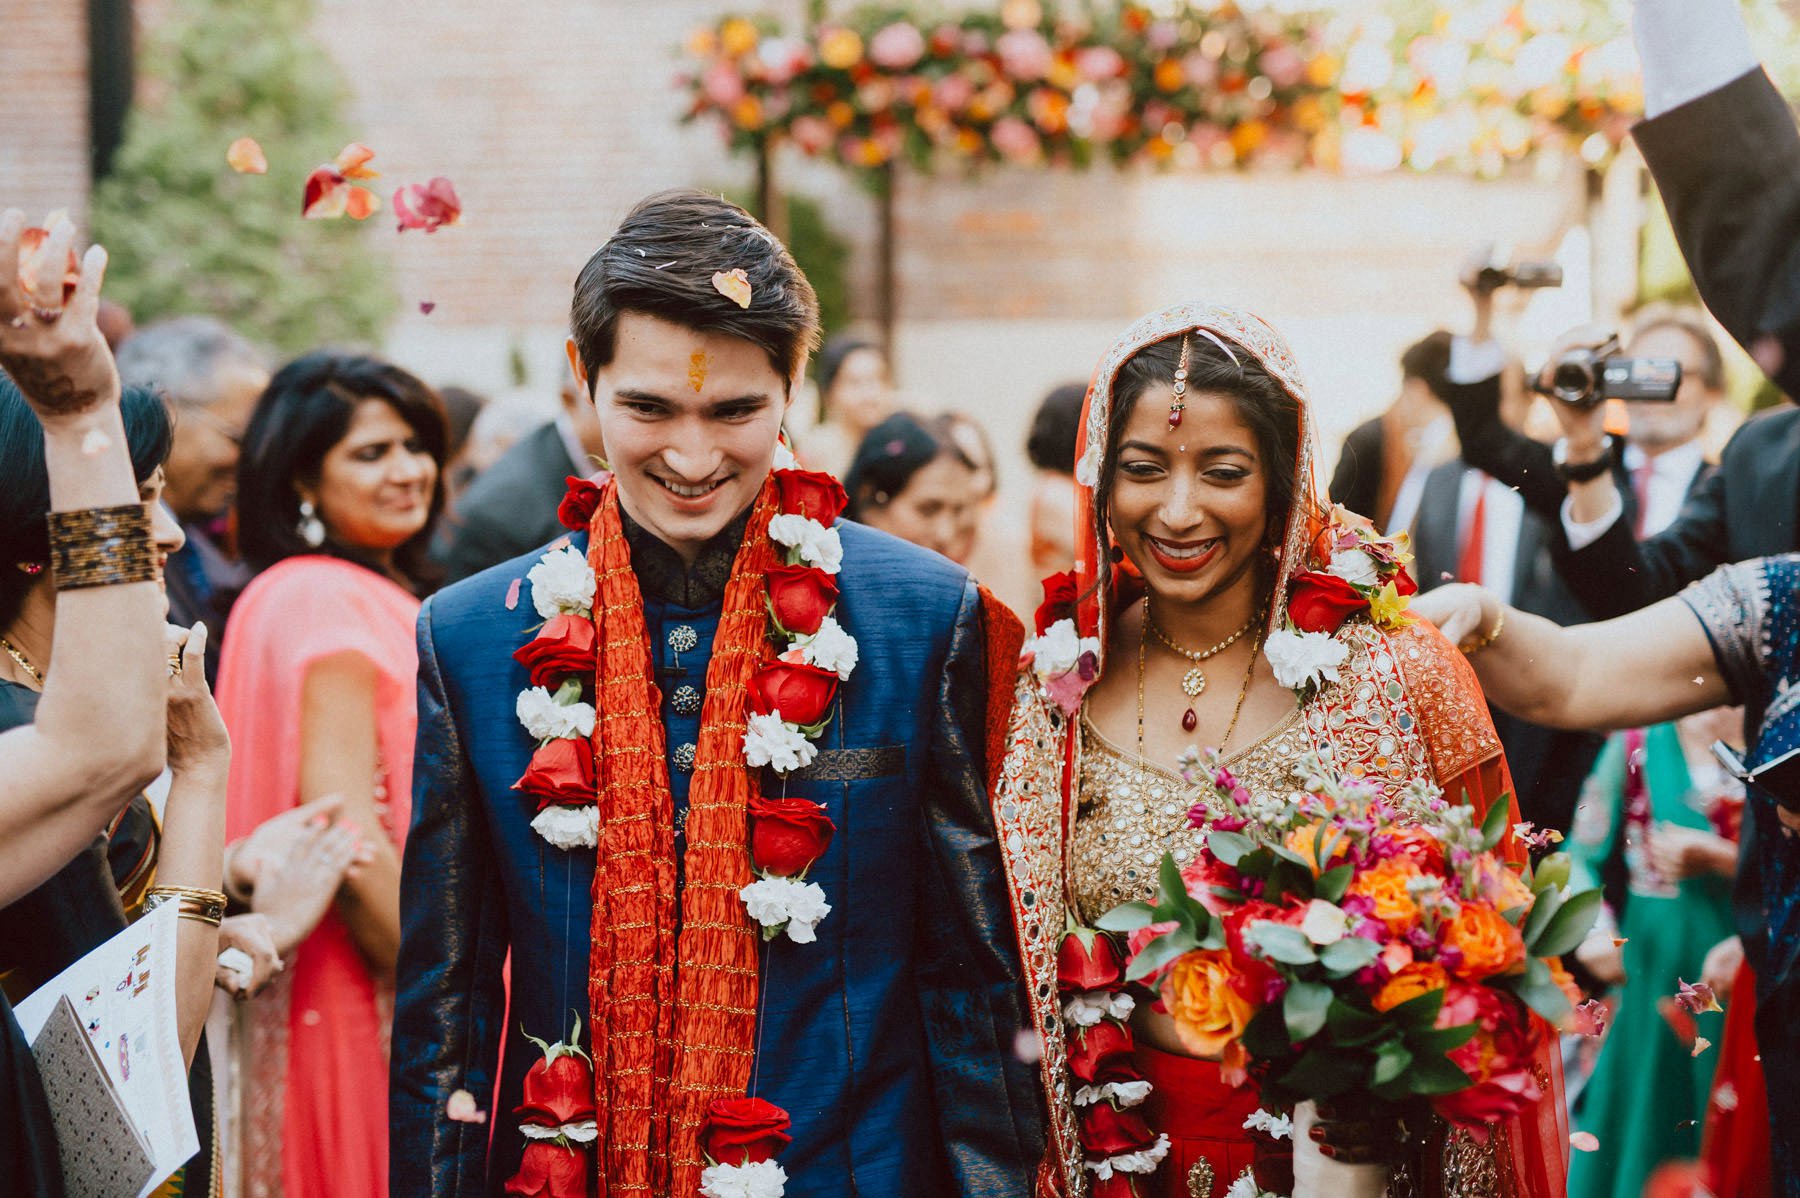 vie-philadelphia-indian-wedding-87.jpg